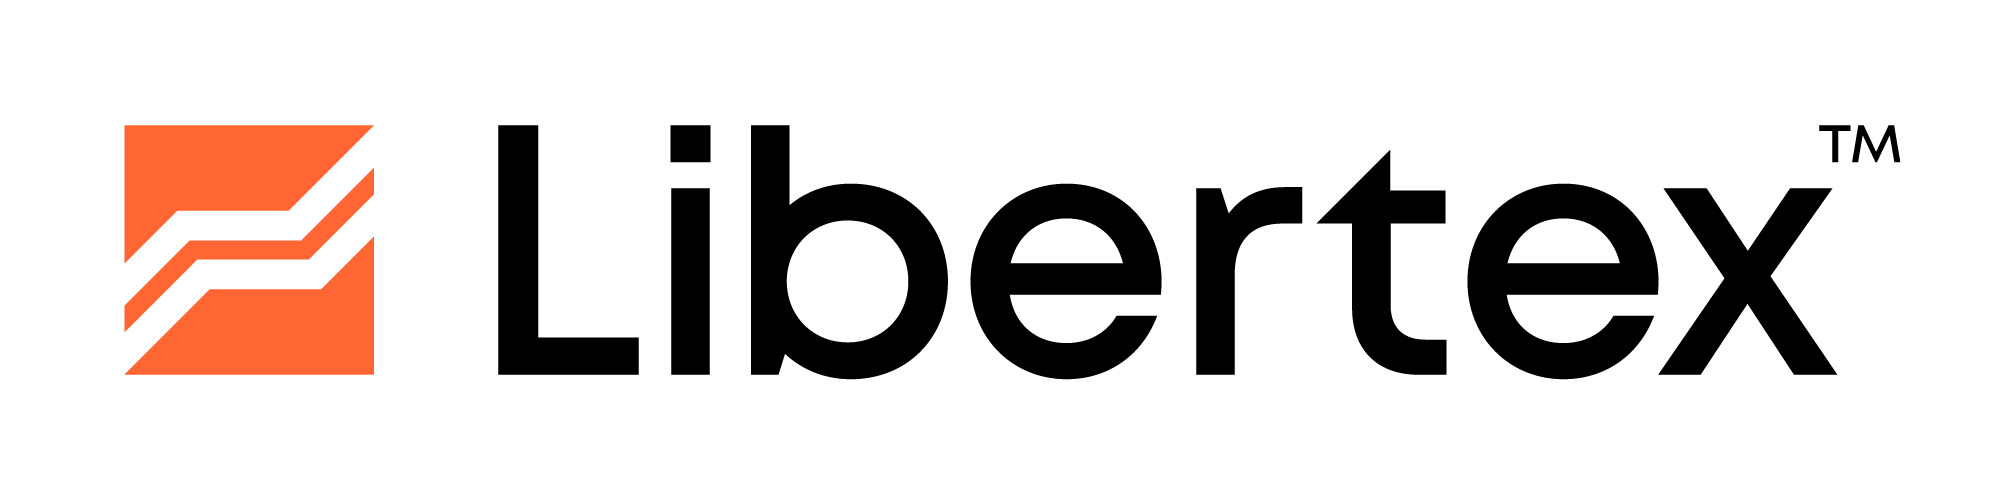 logotipo libertex portugal